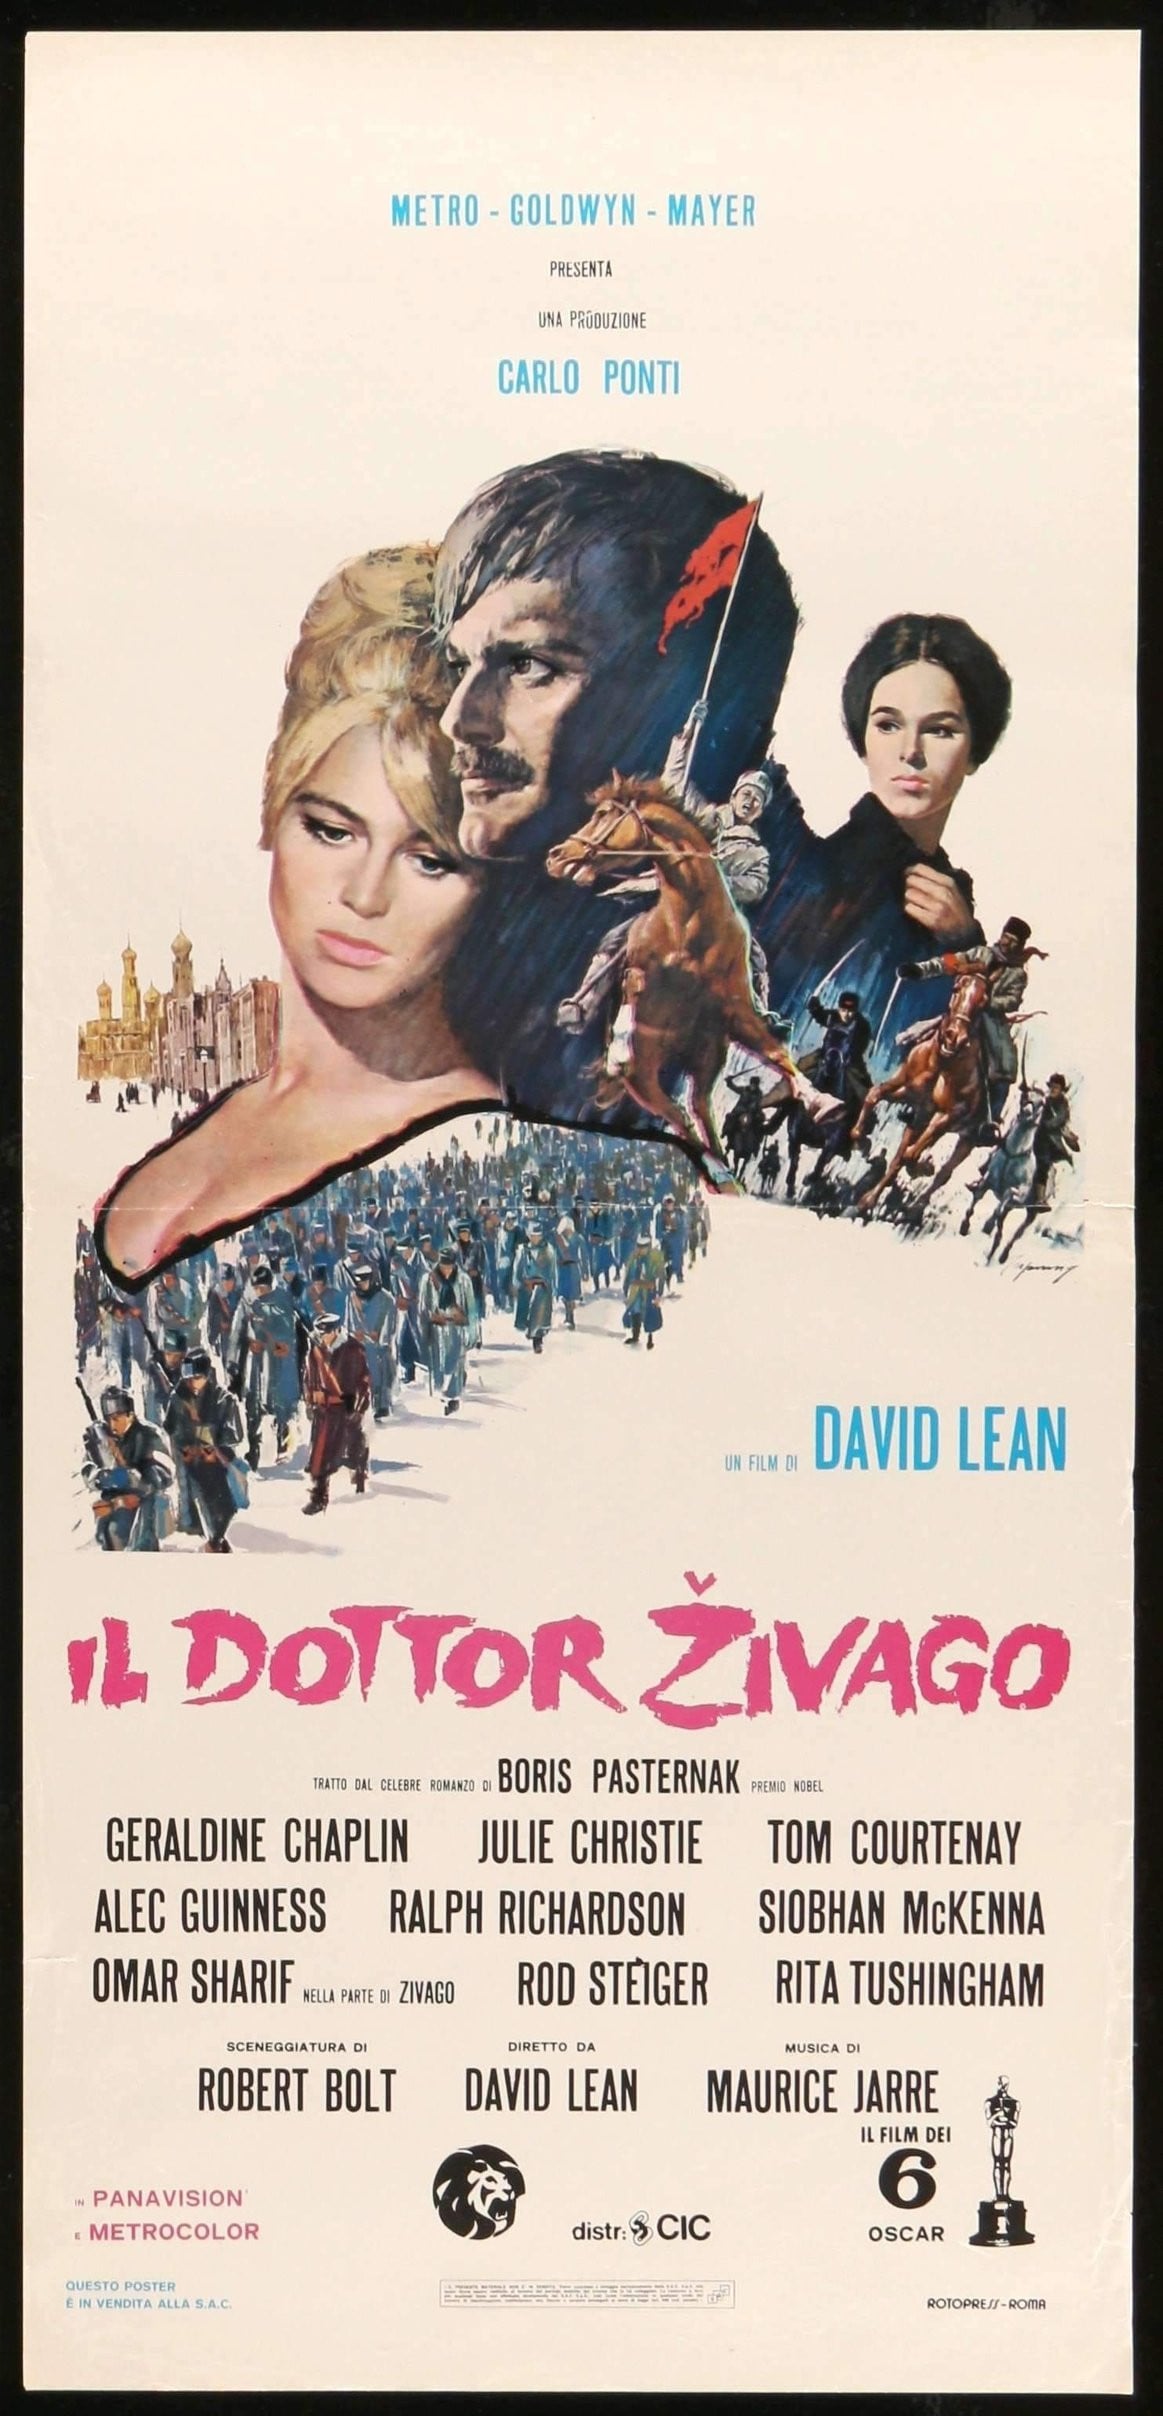 Doctor Zhivago (1965) original movie poster for sale at Original Film Art